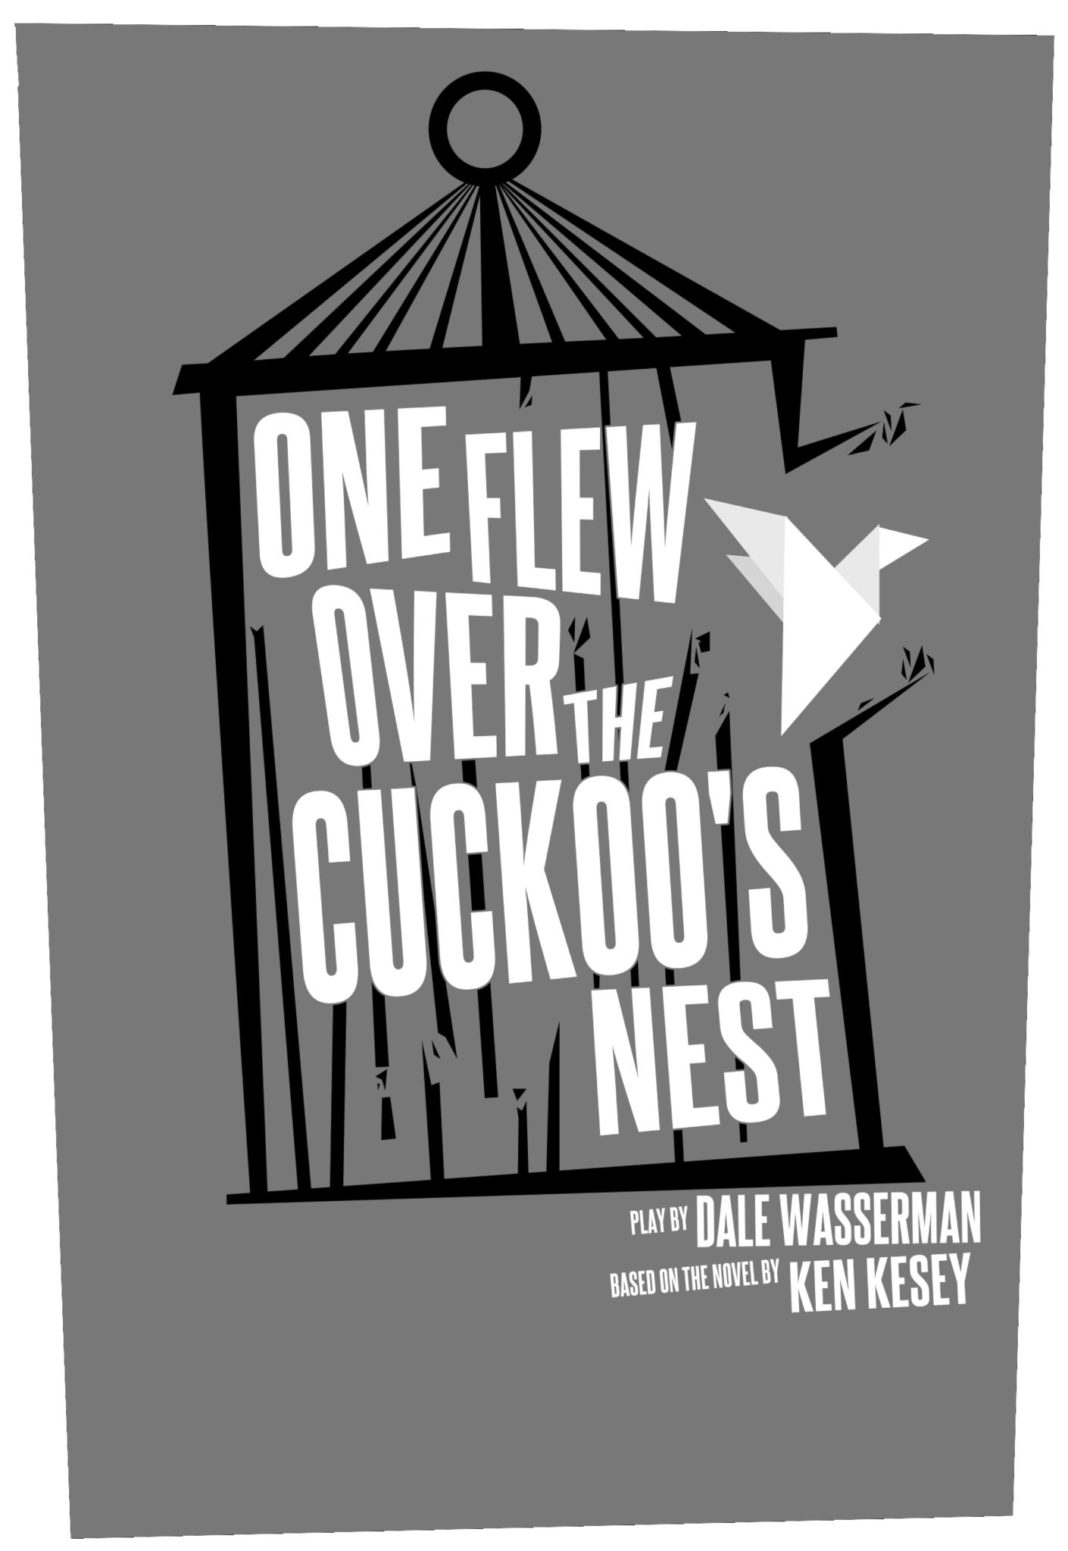 ‘Cuckoo’s Nest’ still resonates - A close up of a sign - Logo